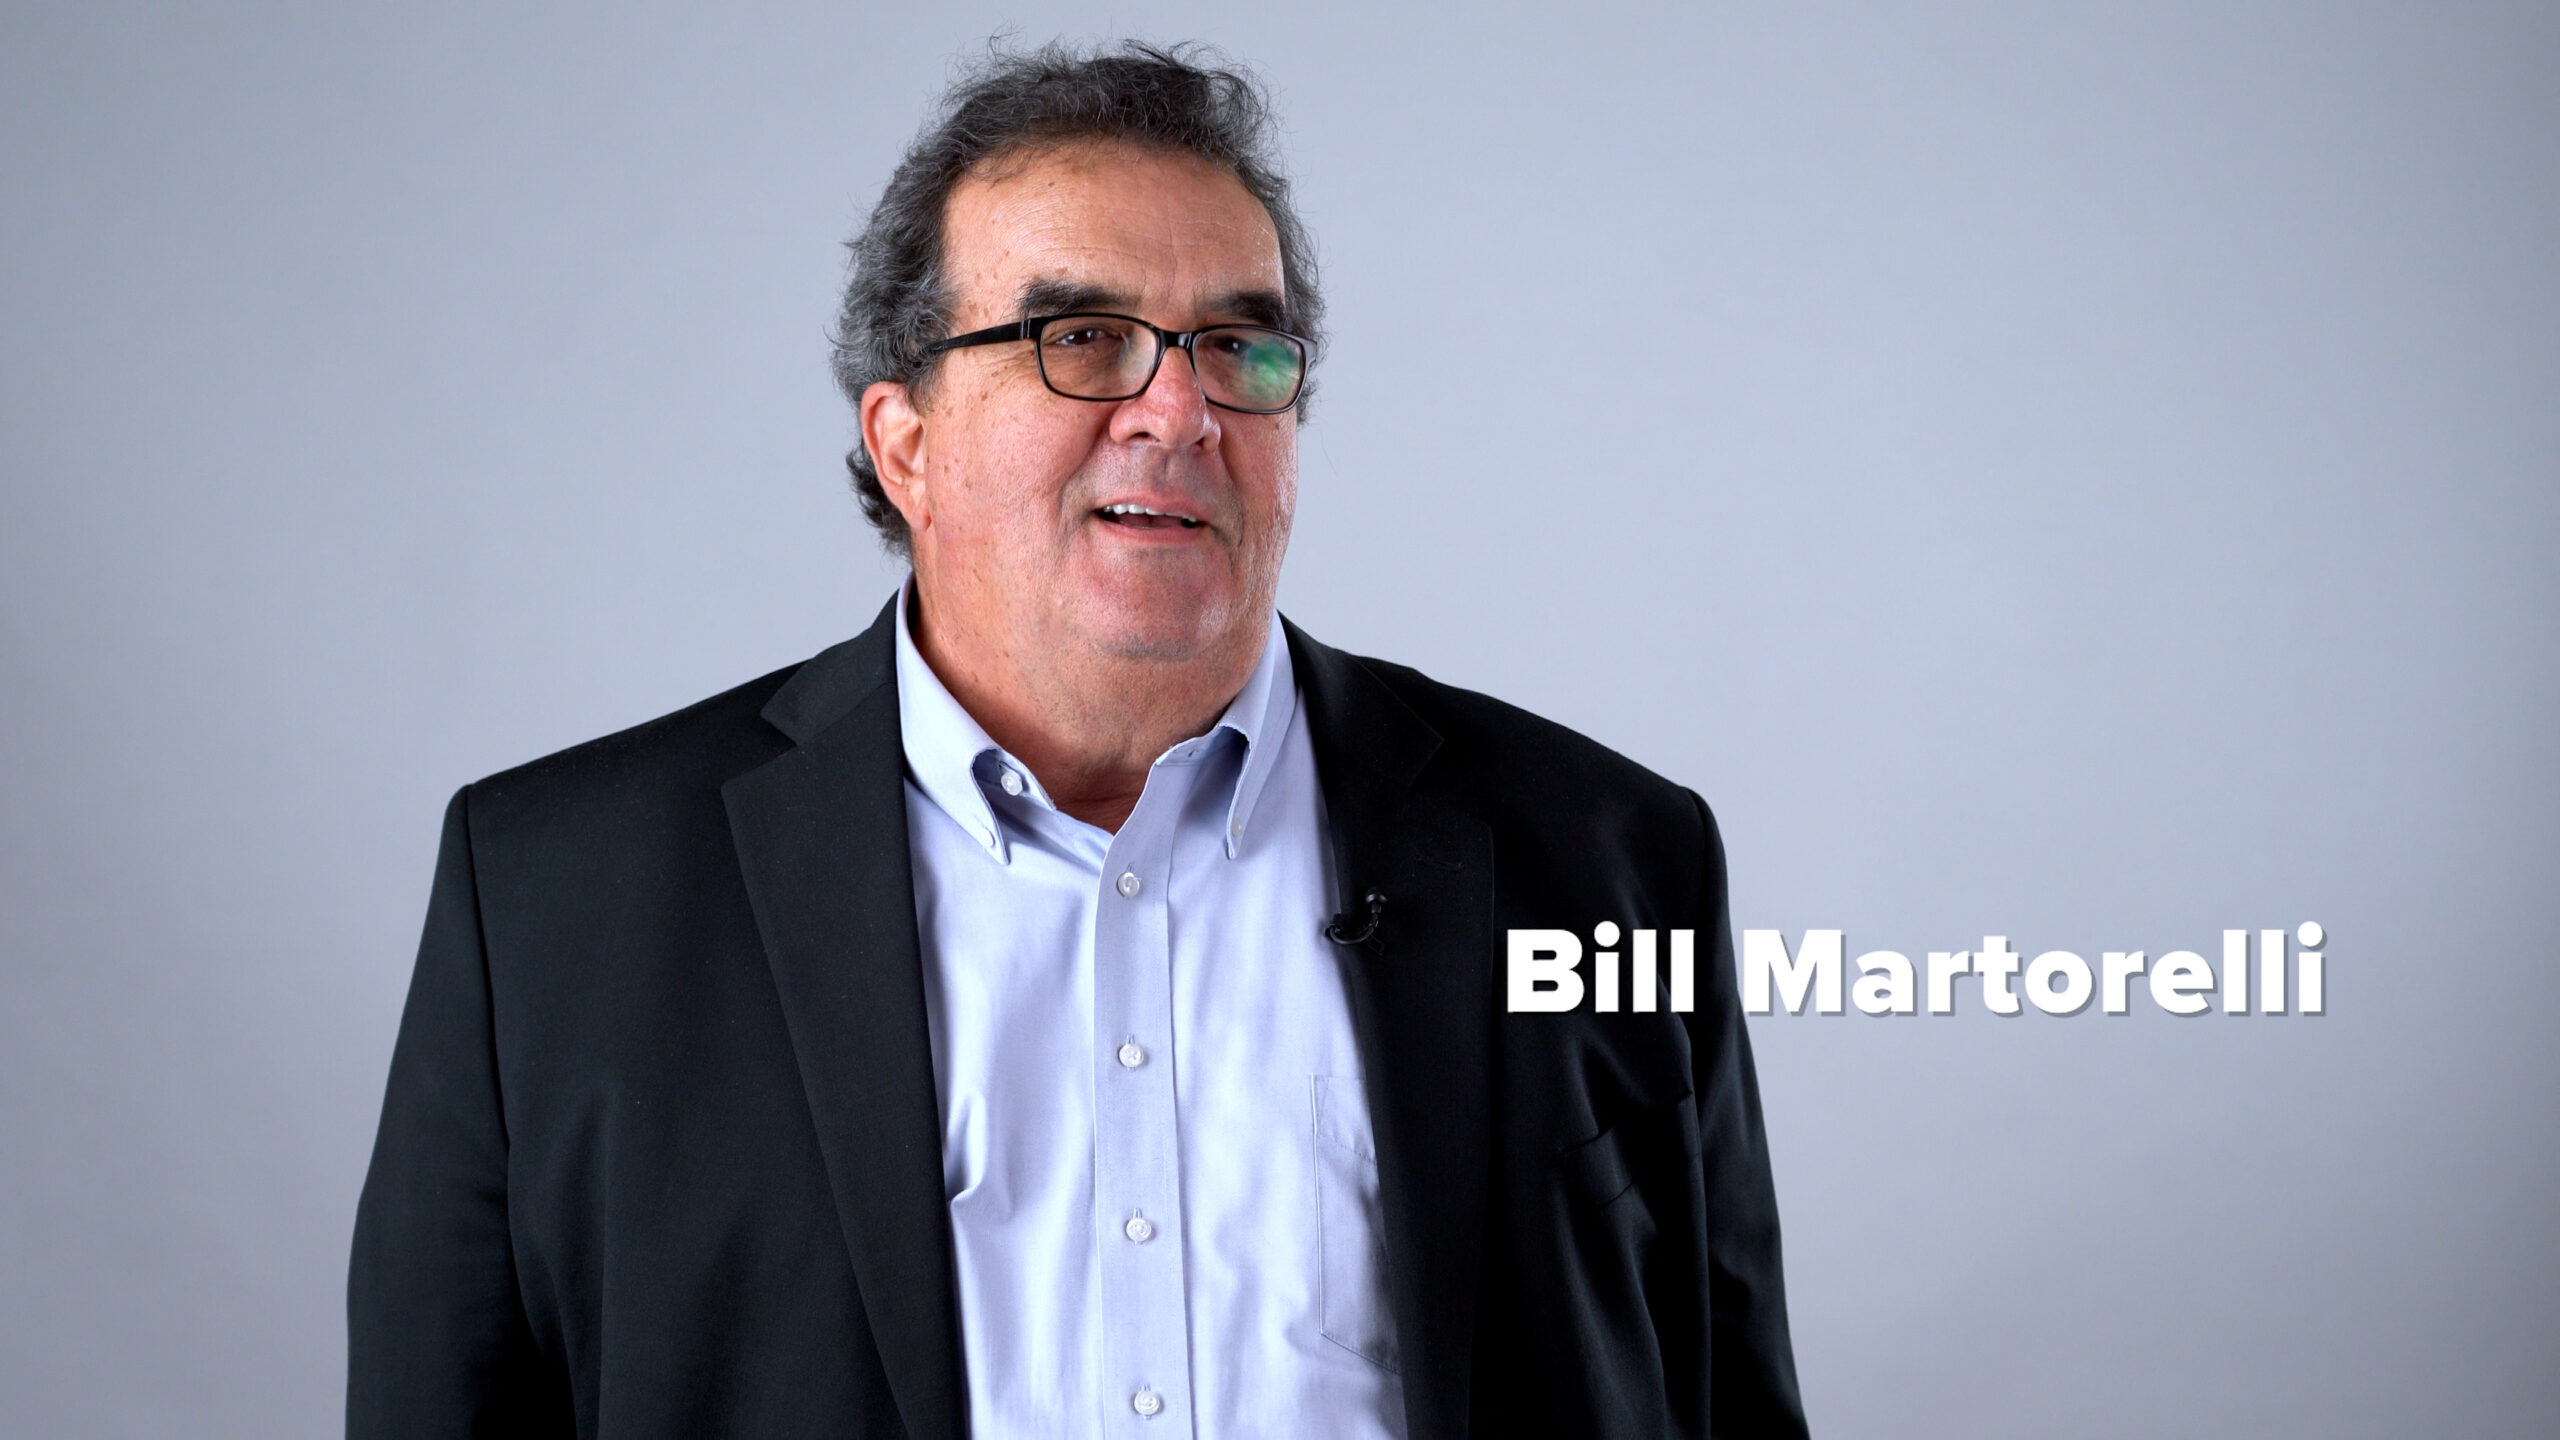 Bill Martorelli - Forrester Principal Analyst 